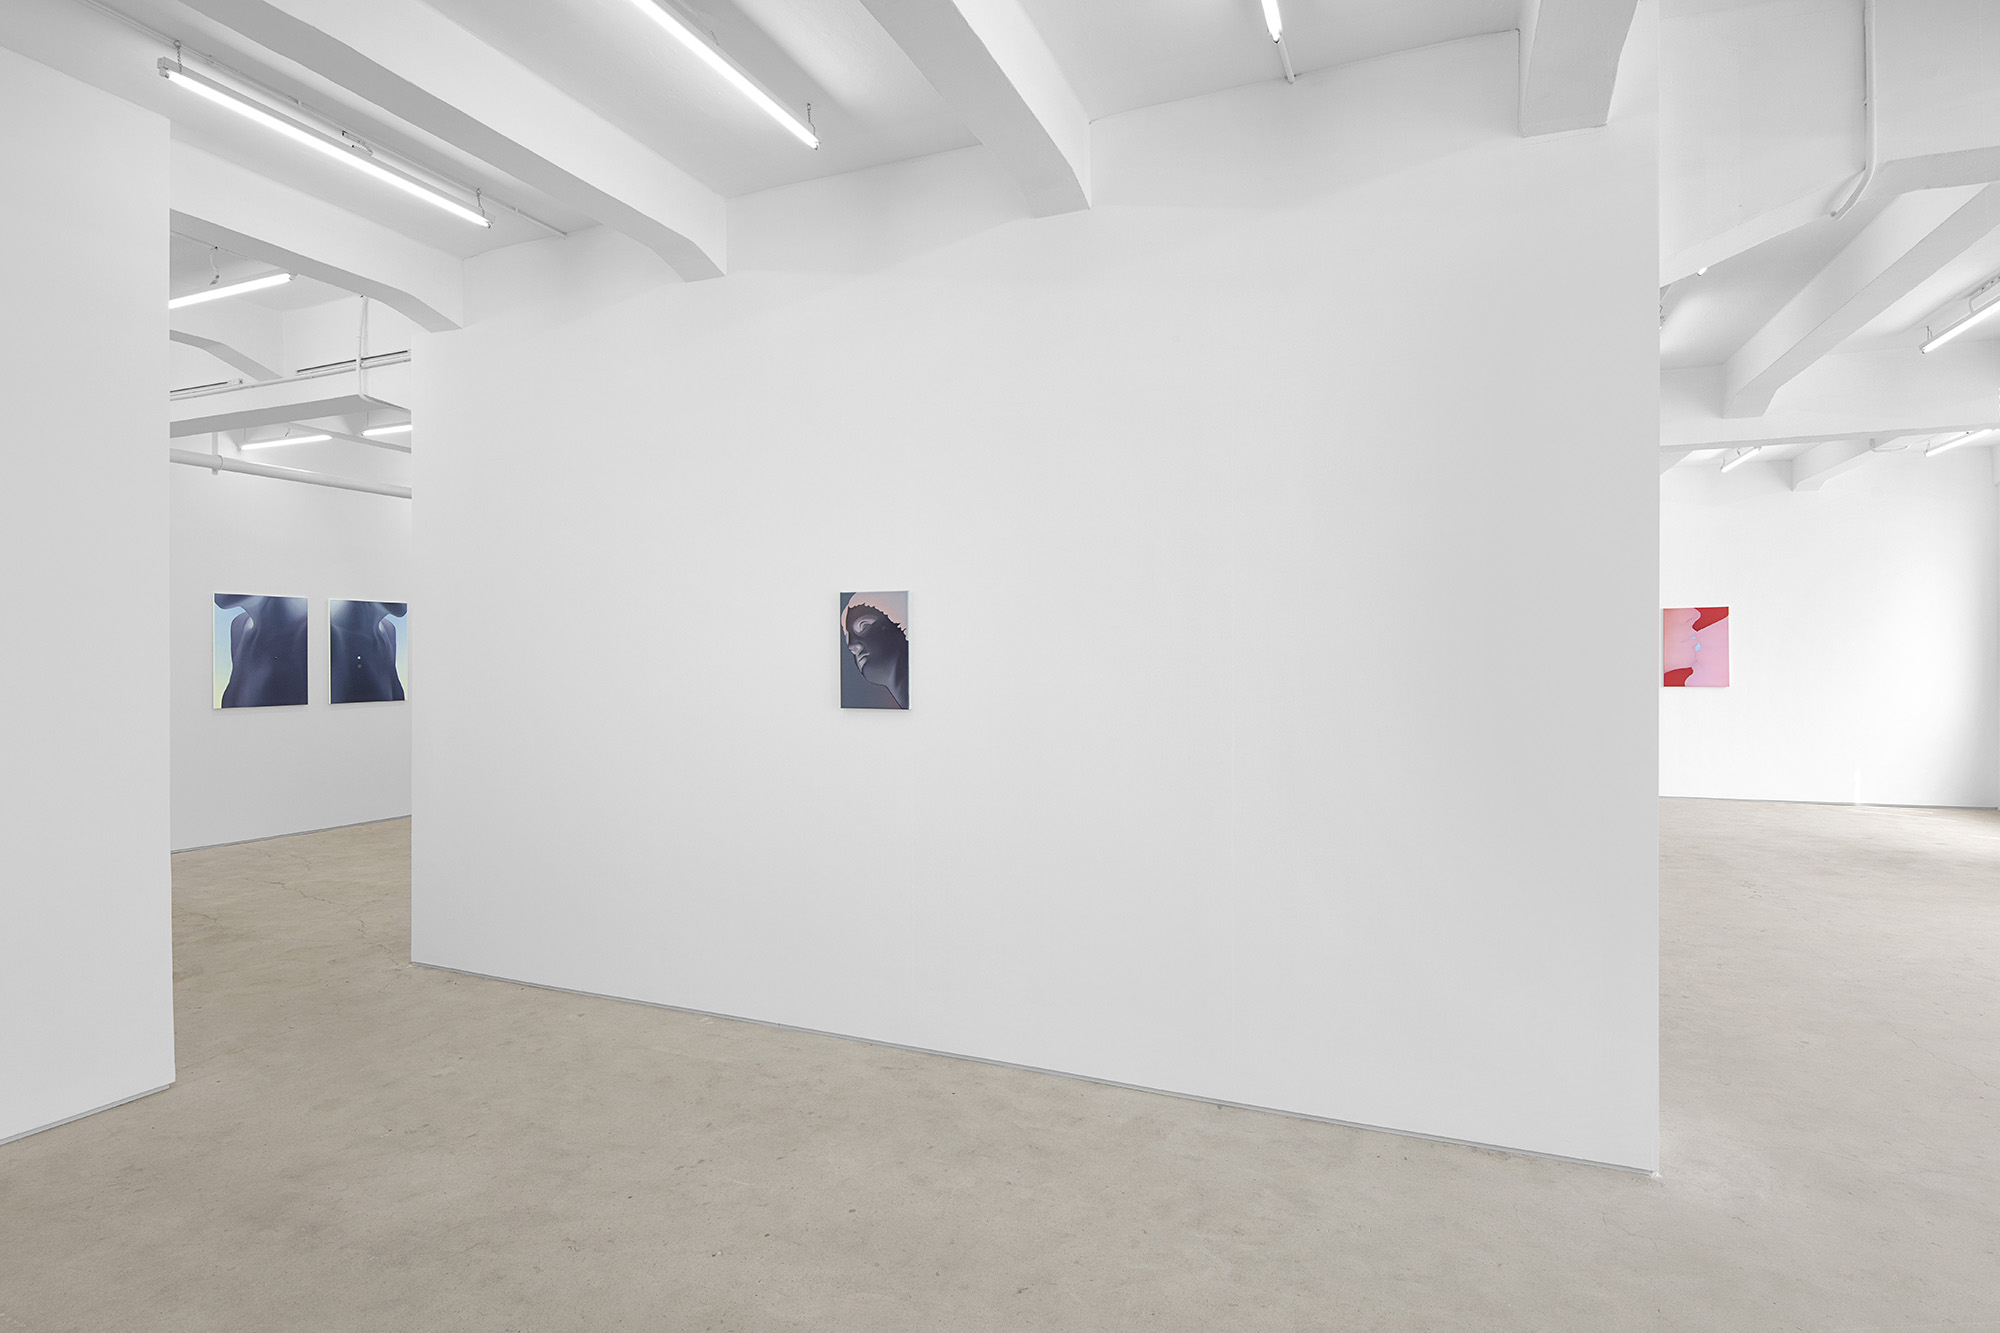 Vivian Greven, The Negatives, solo exhibition at Gallery Vacancy, installation view 2